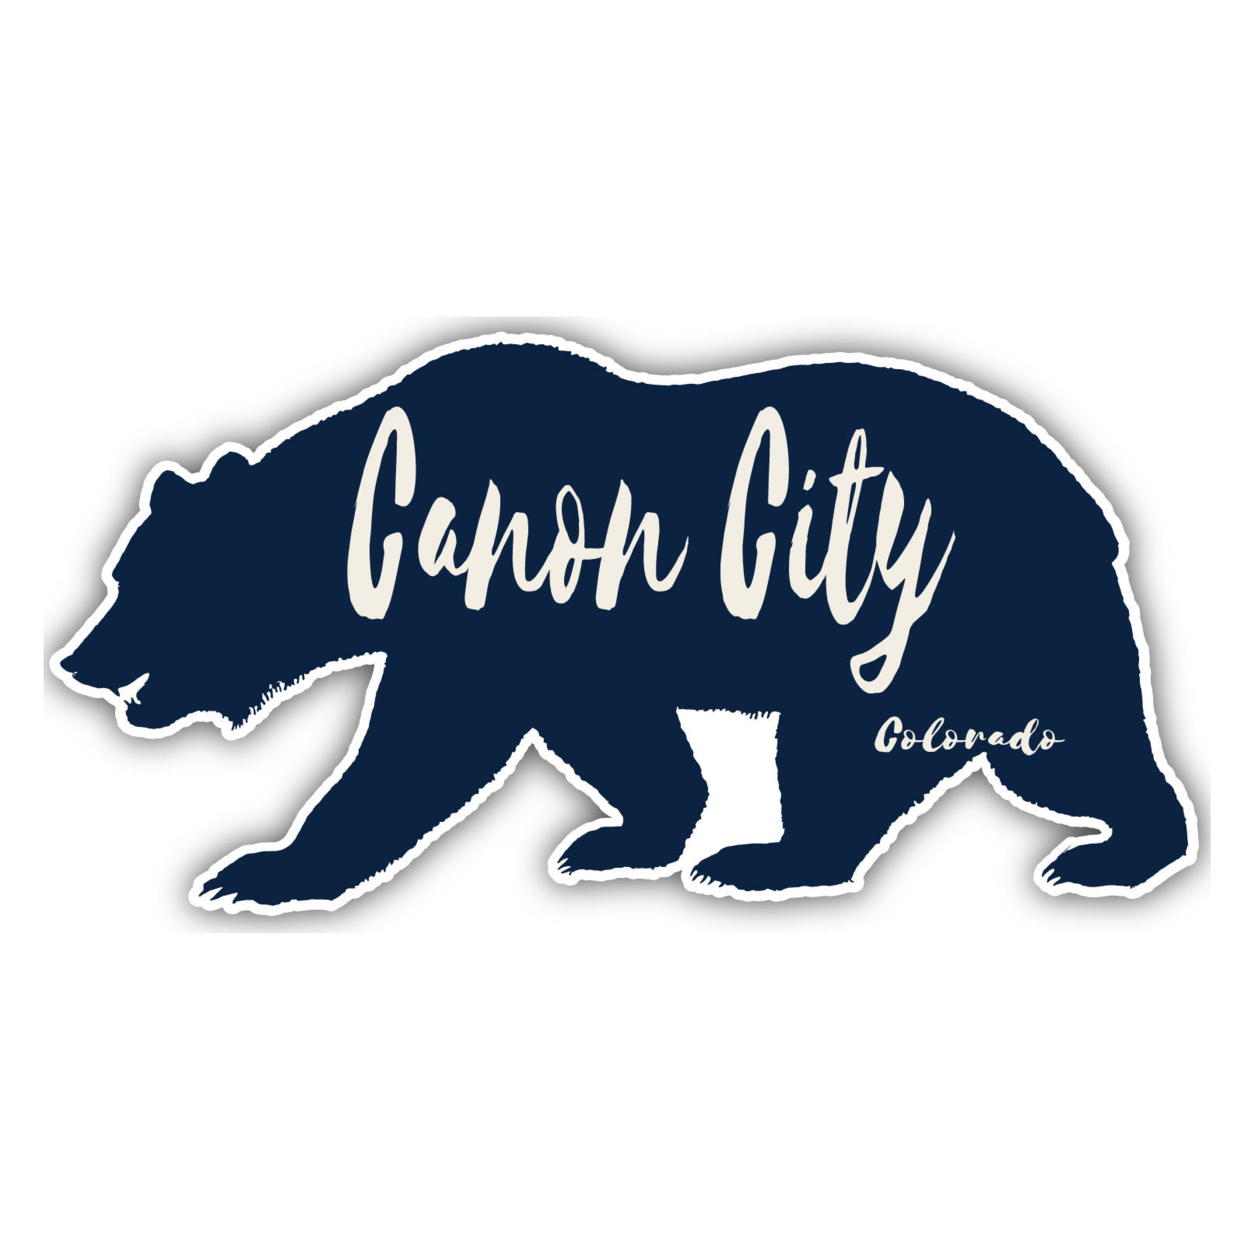 Canon City Colorado Souvenir Decorative Stickers (Choose Theme And Size) - 4-Pack, 10-Inch, Tent